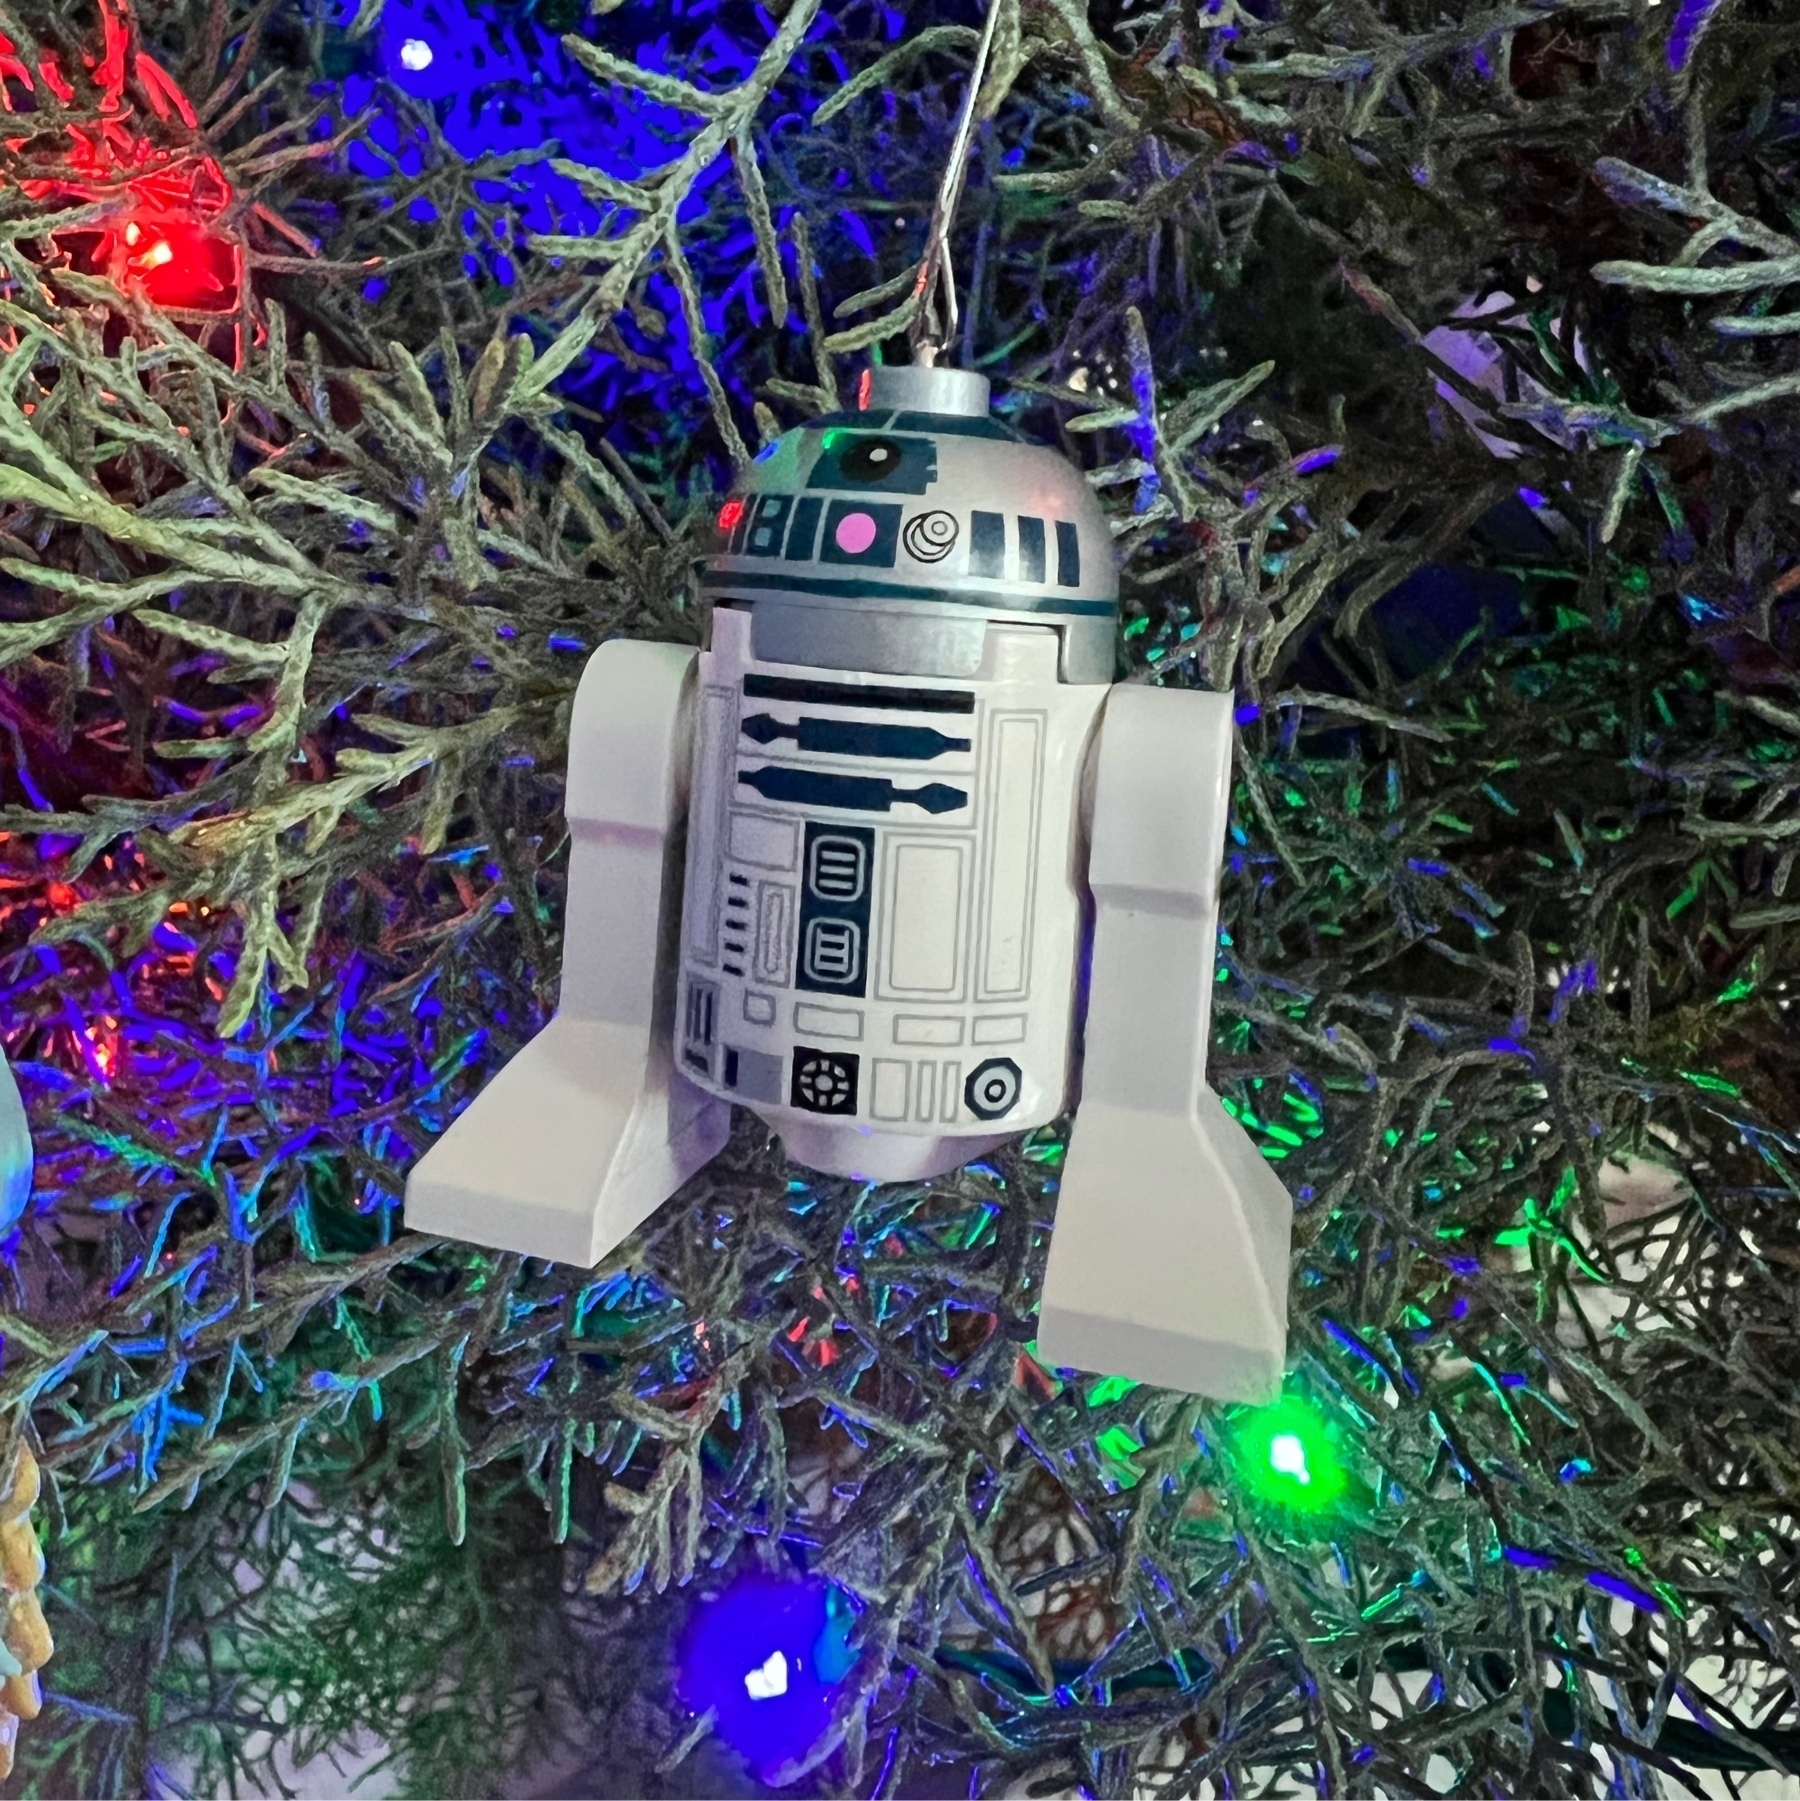 R2-D2 ornament on a Christmas tree